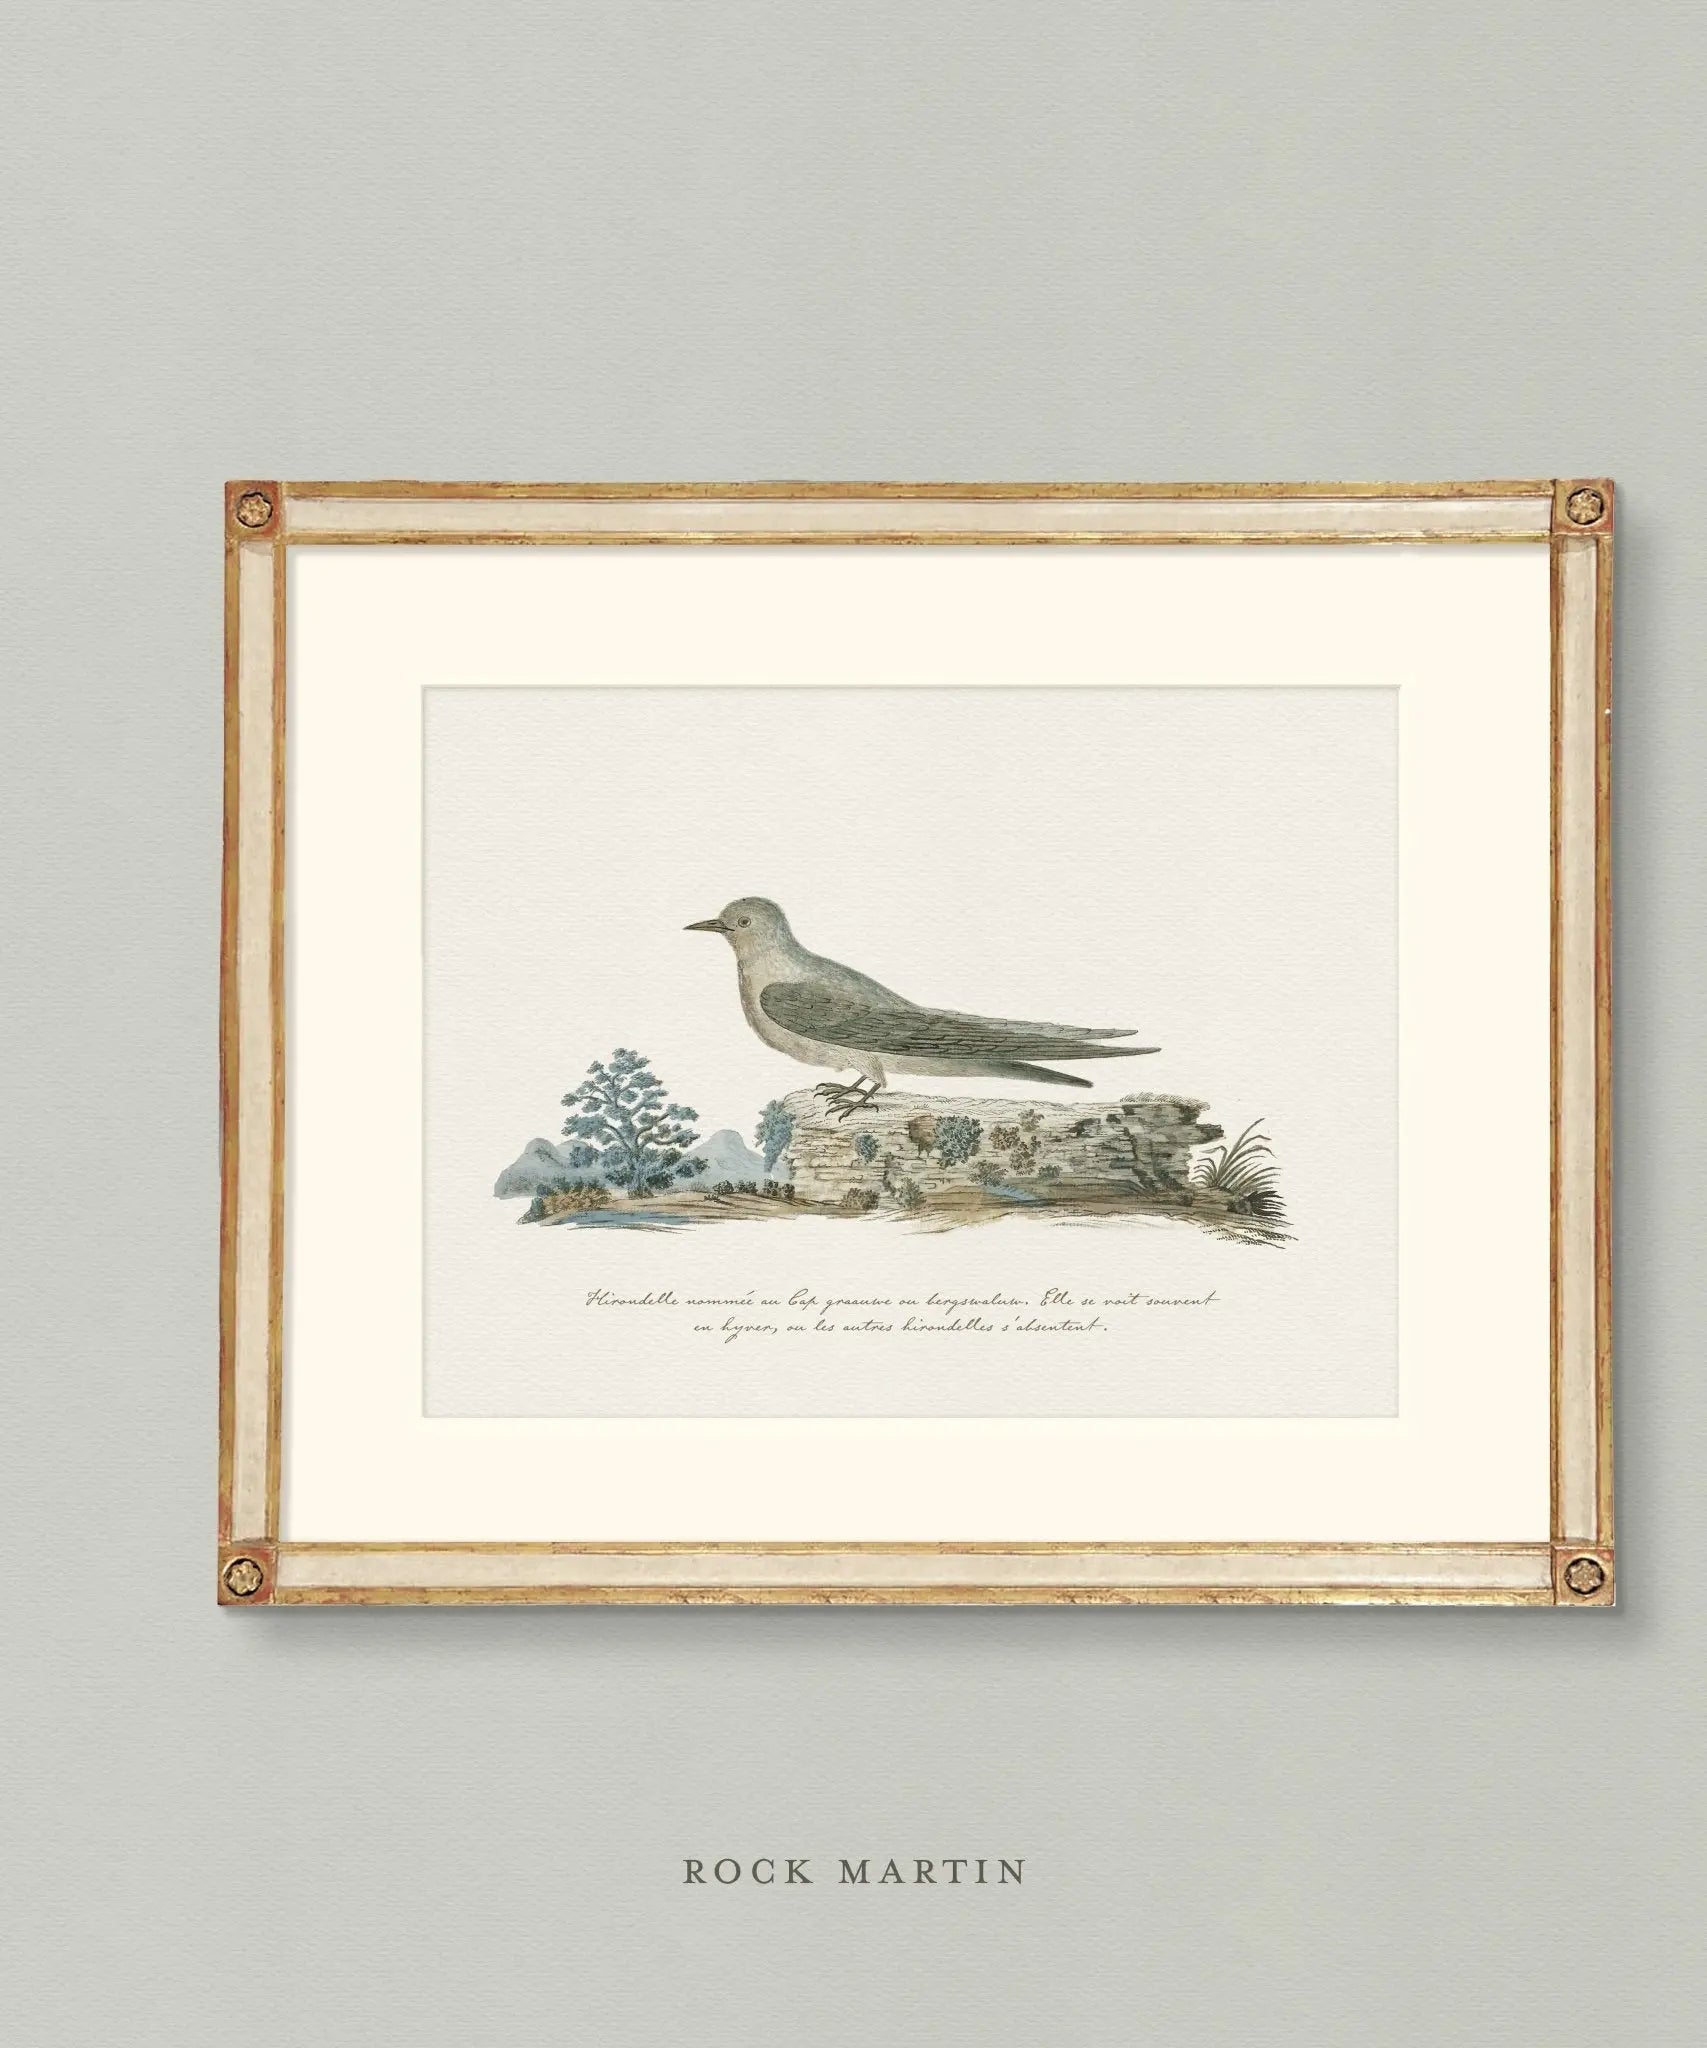 Gallery Series: Botanicals + Birds - Emblem Atelier